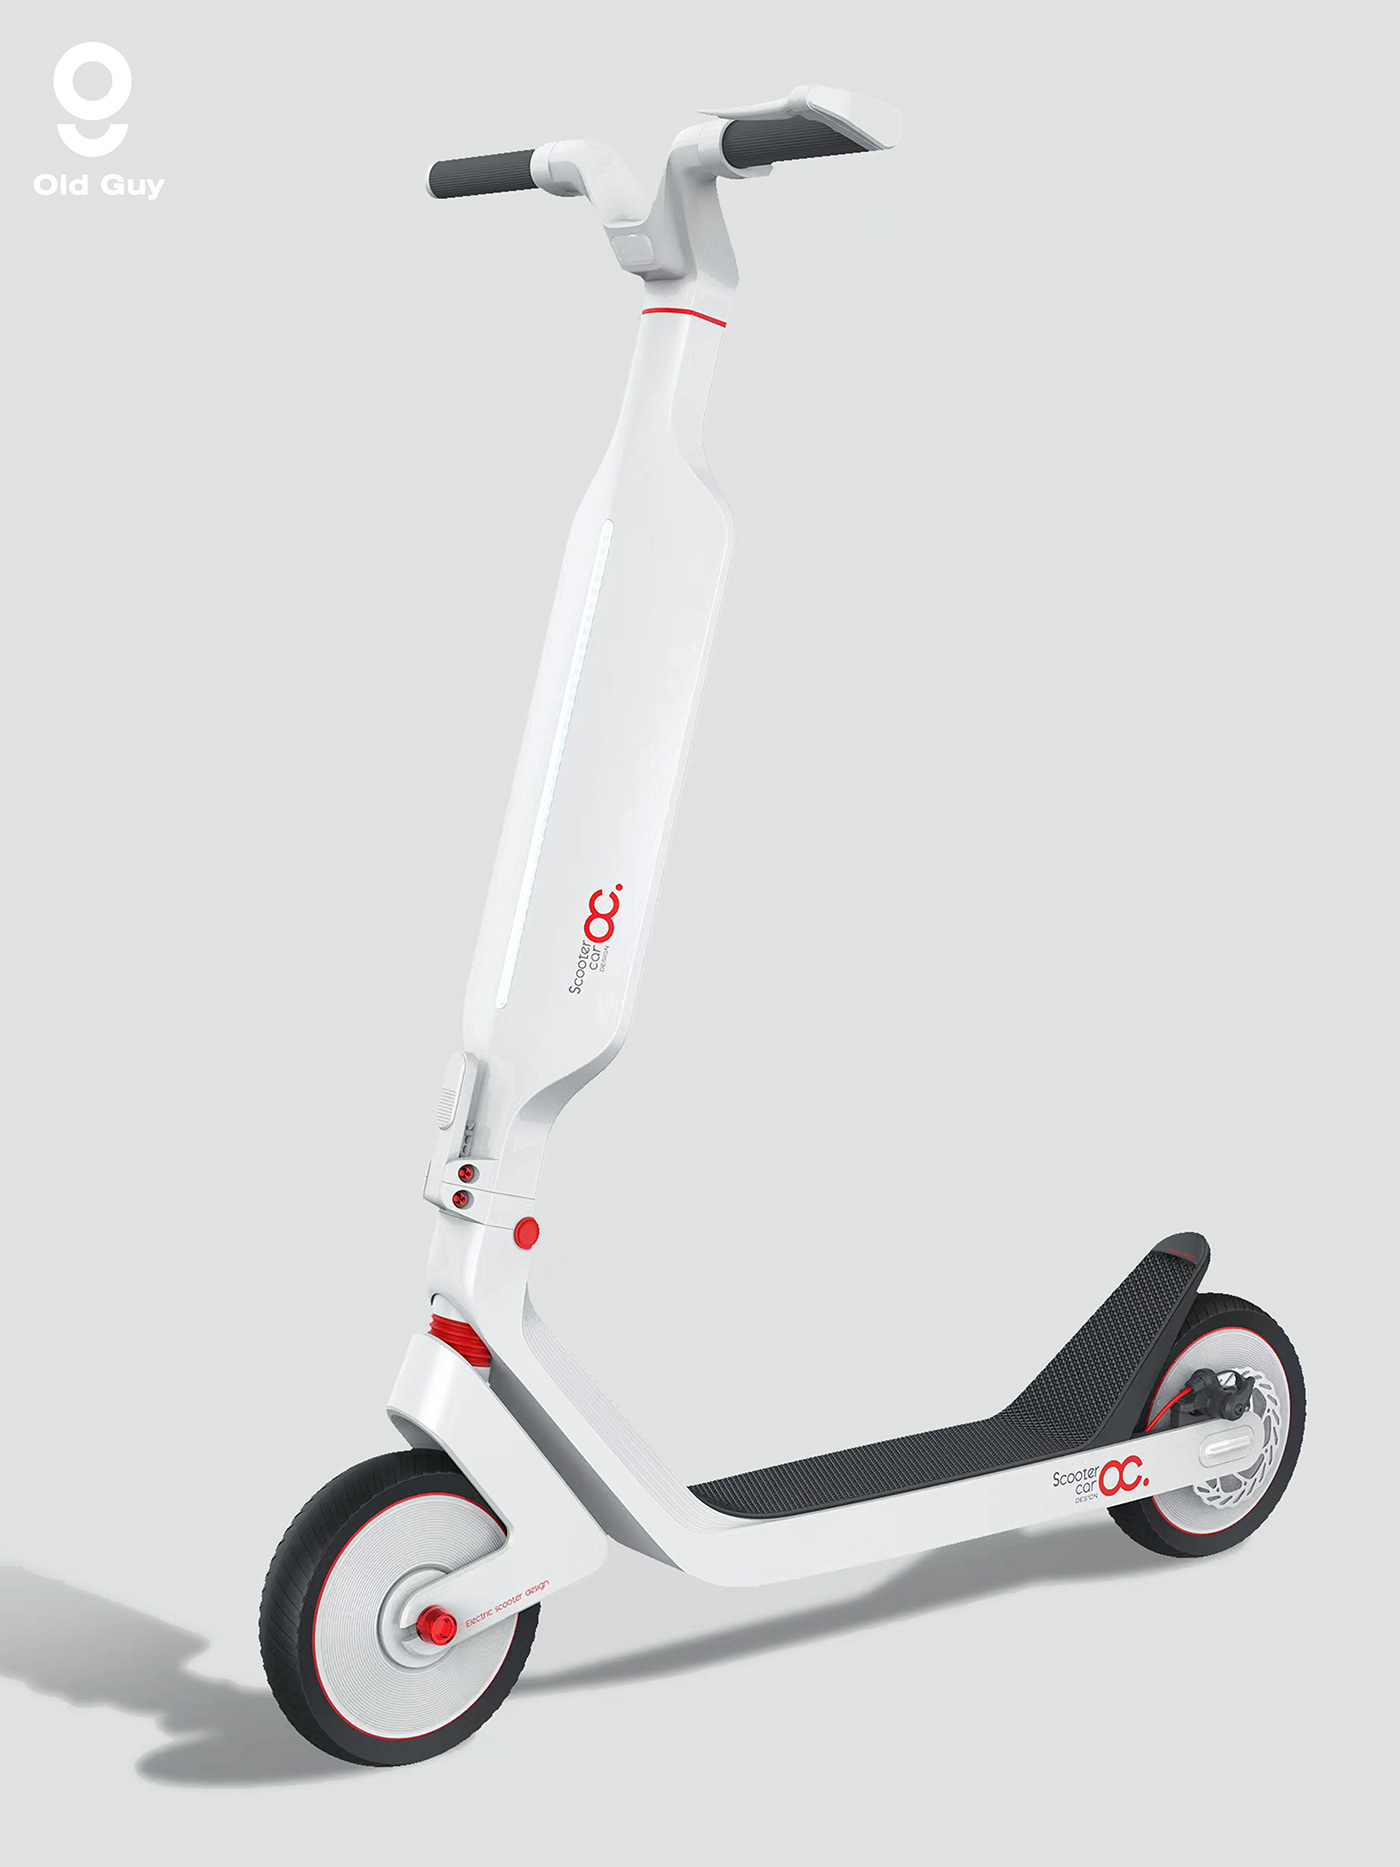 Scooter Electric Scooter transportation Transportation Design